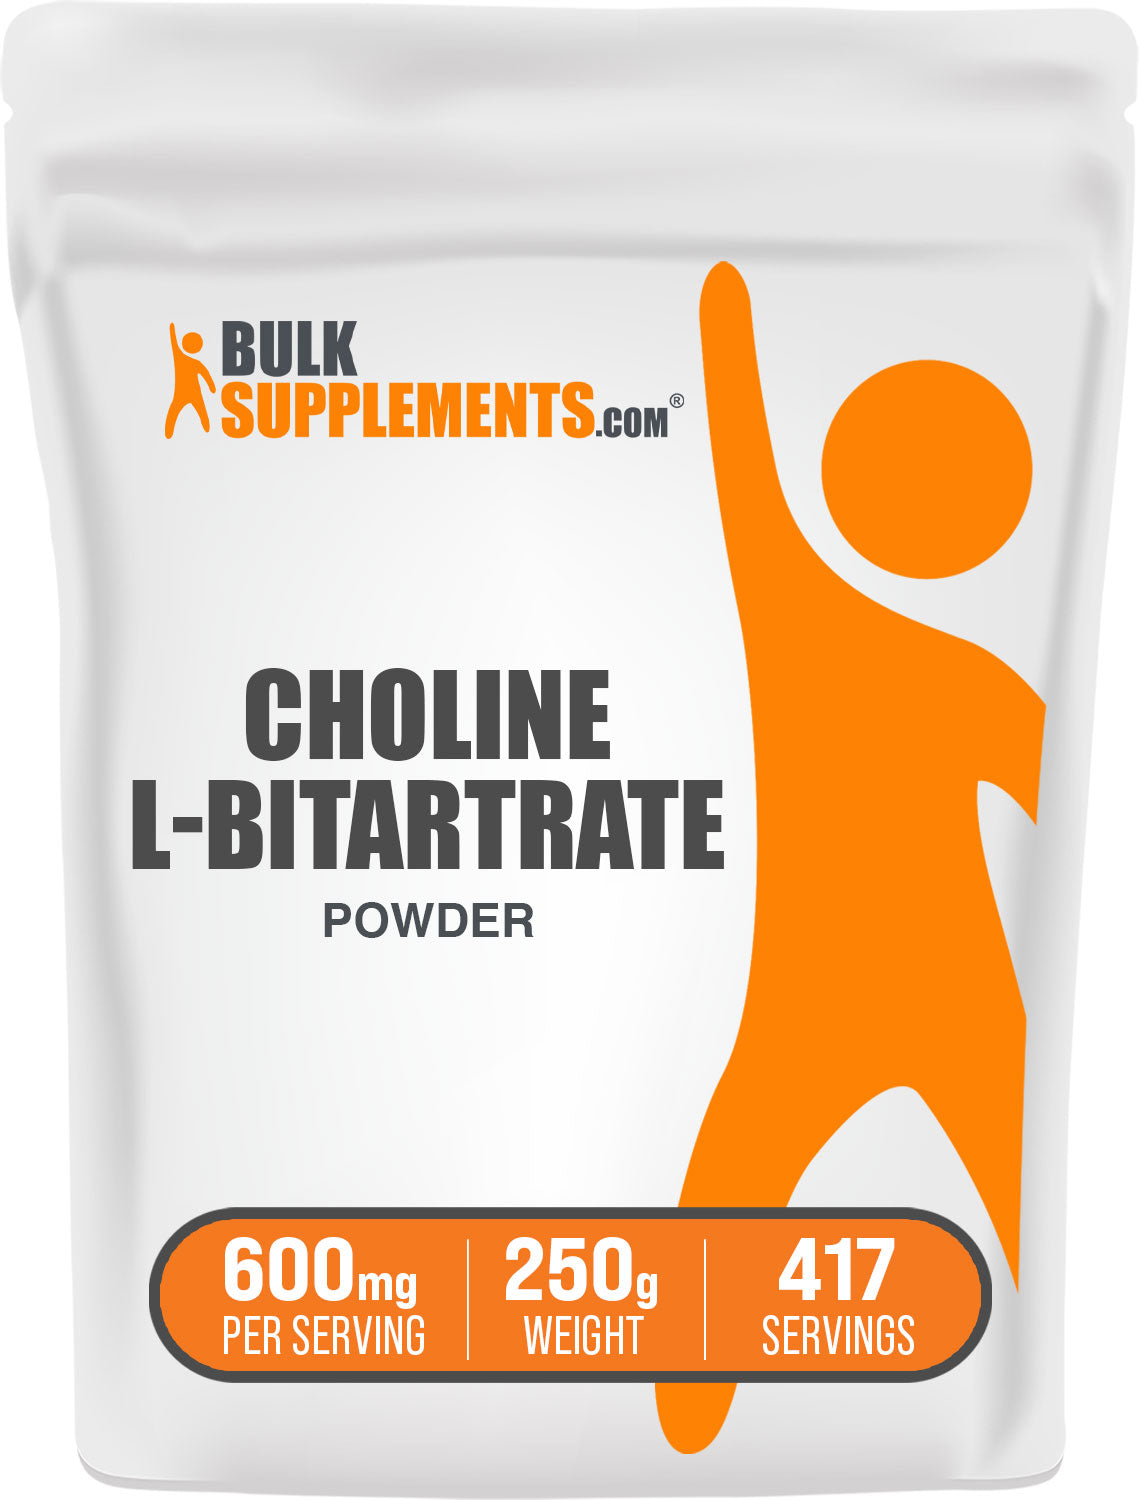 250g choline supplements